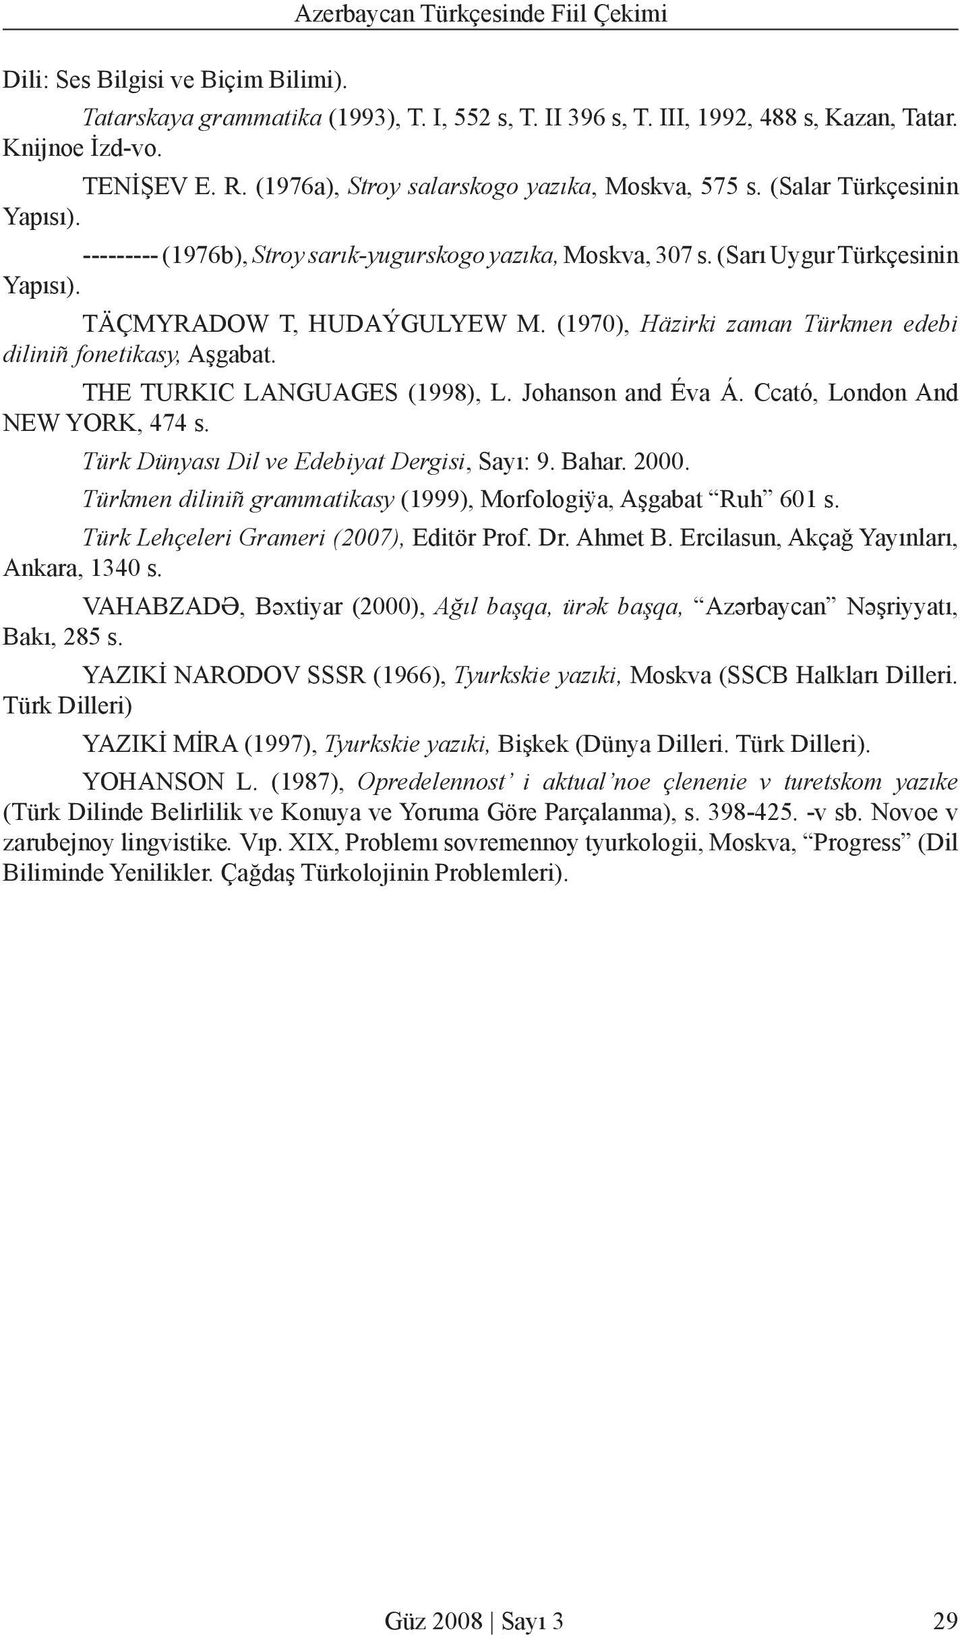 TÄÇMYRADOW T, HUDAÝGULYEW M. (1970), Häzirki Türkmen edebi diliniñ fonetikasy, Aşgabat. THE TURKIC LANGUAGES (1998), L. Johanson and Éva Á. Ccató, London And NEW YORK, 474 s.